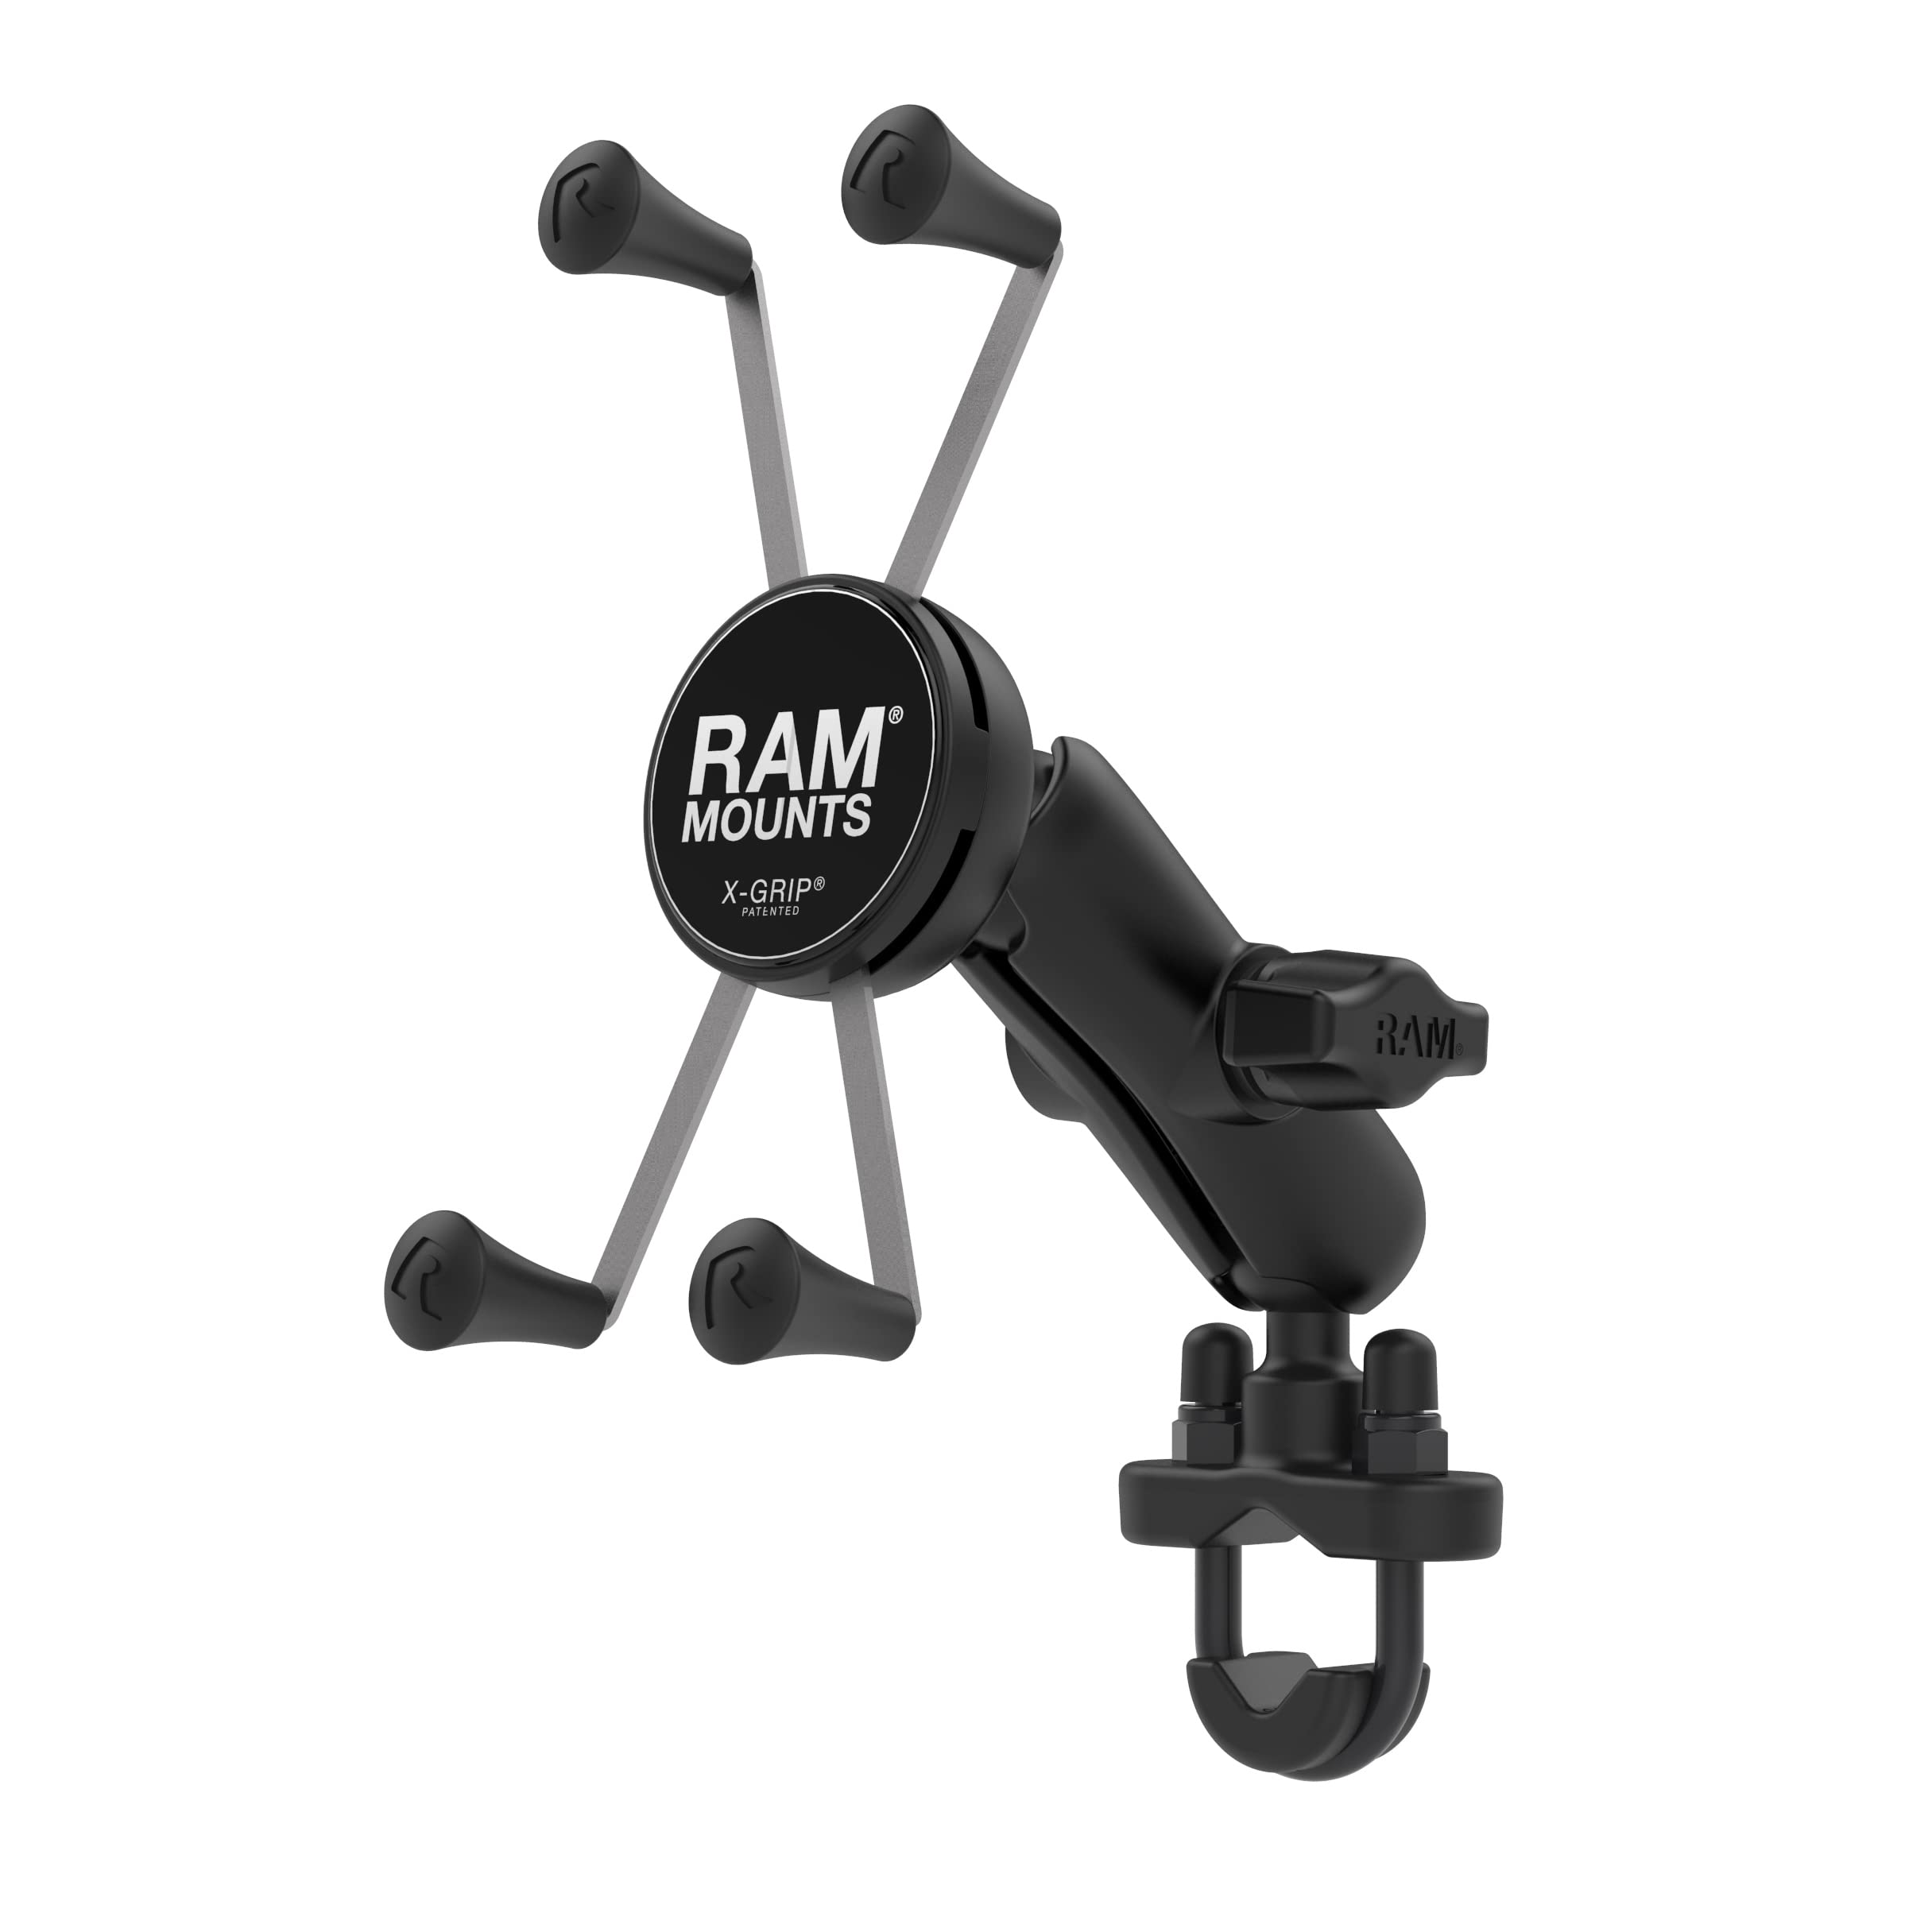 RAM Mounts X-Grip Large Phone Mount with Handlebar U-Bolt Base RAM-B-149Z-UN10U with Medium Arm for Motorcycle, ATV/UTV, Bike